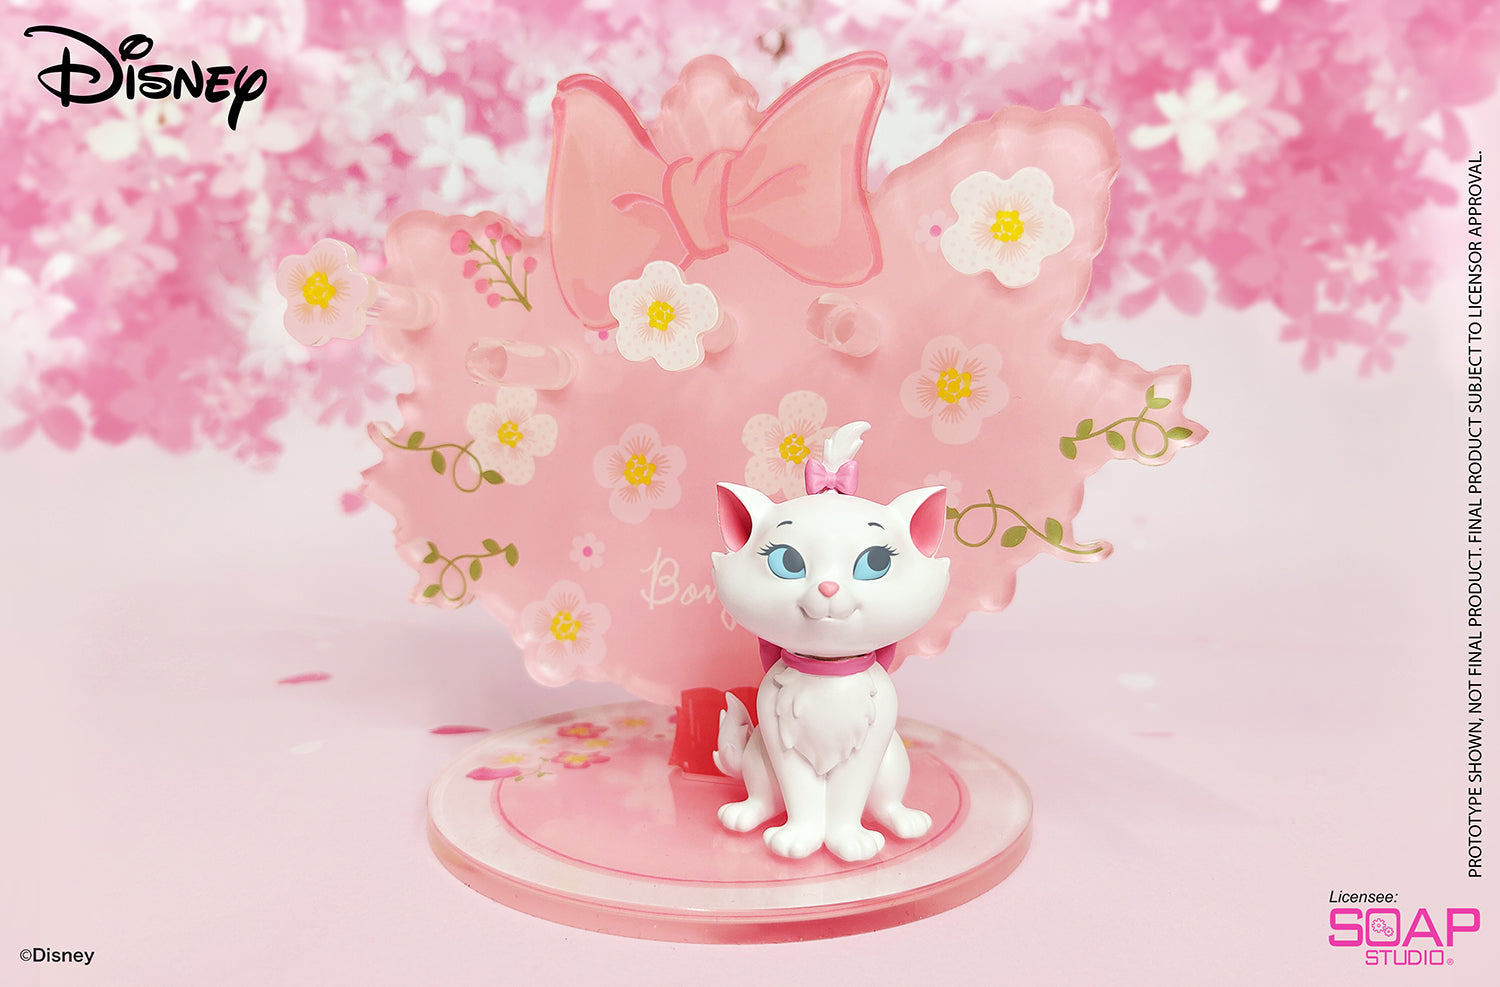 Soap Studio DY001 Disney Cherry Blossom - Marie Accessory Tree